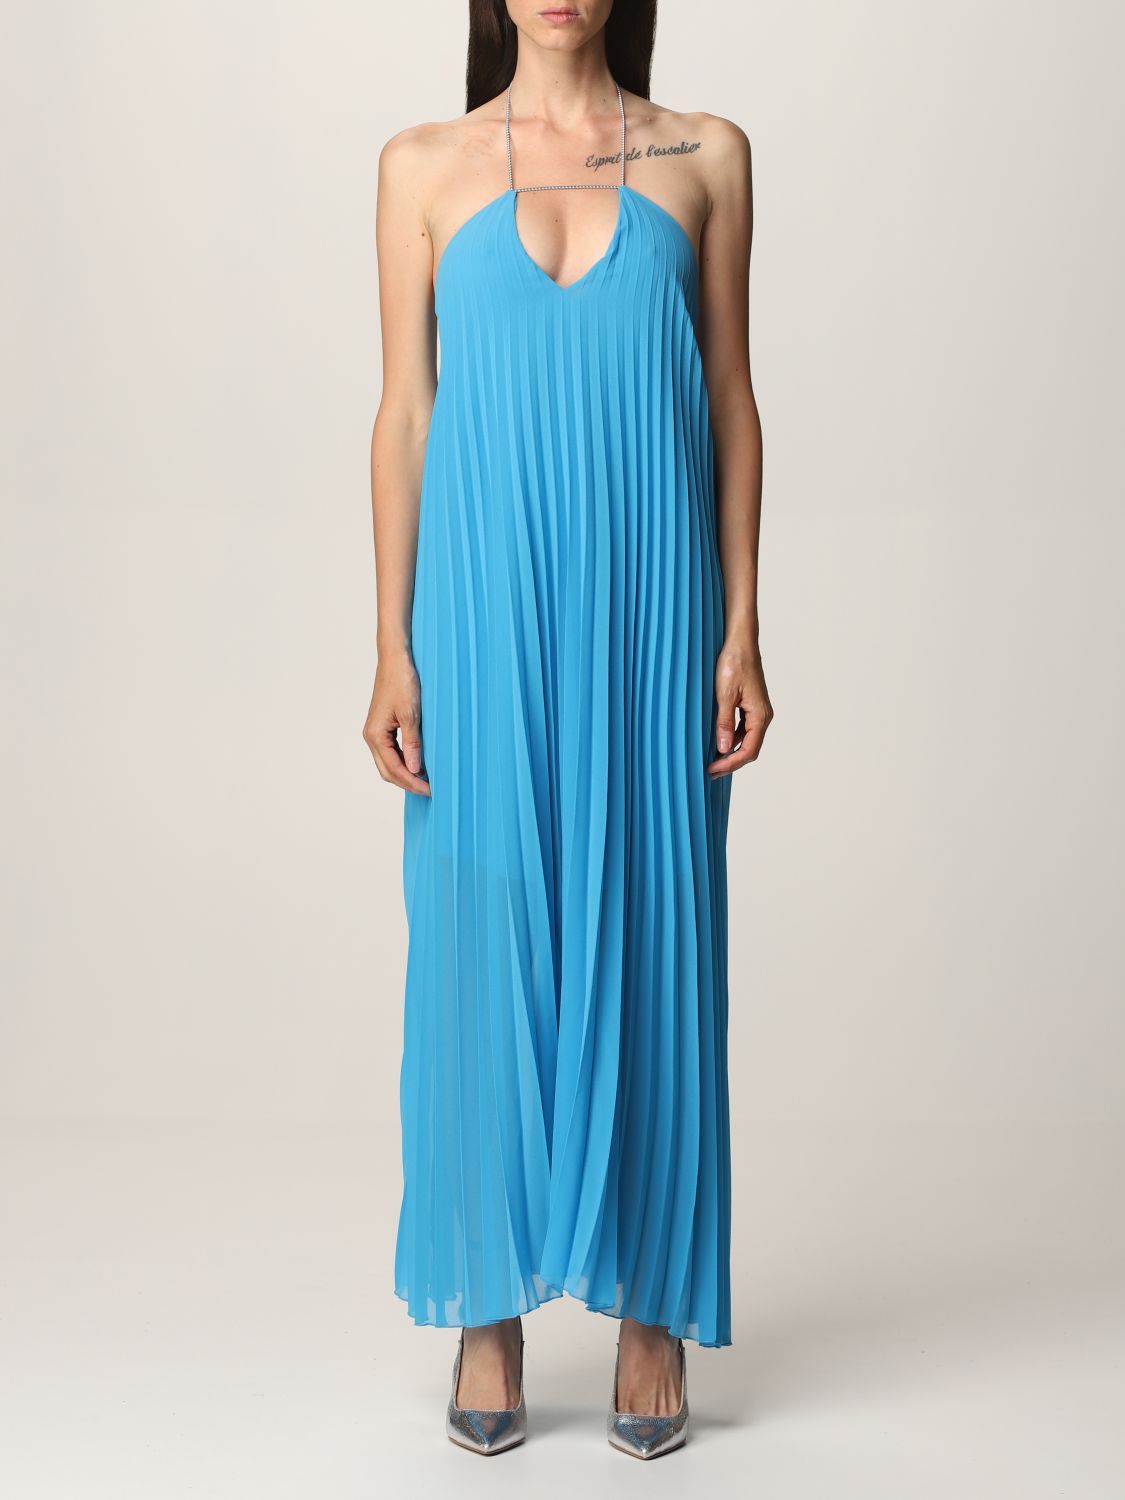 PATRIZIA PEPE: dress for woman - Turquoise | Patrizia Pepe dress 2A2215 ...